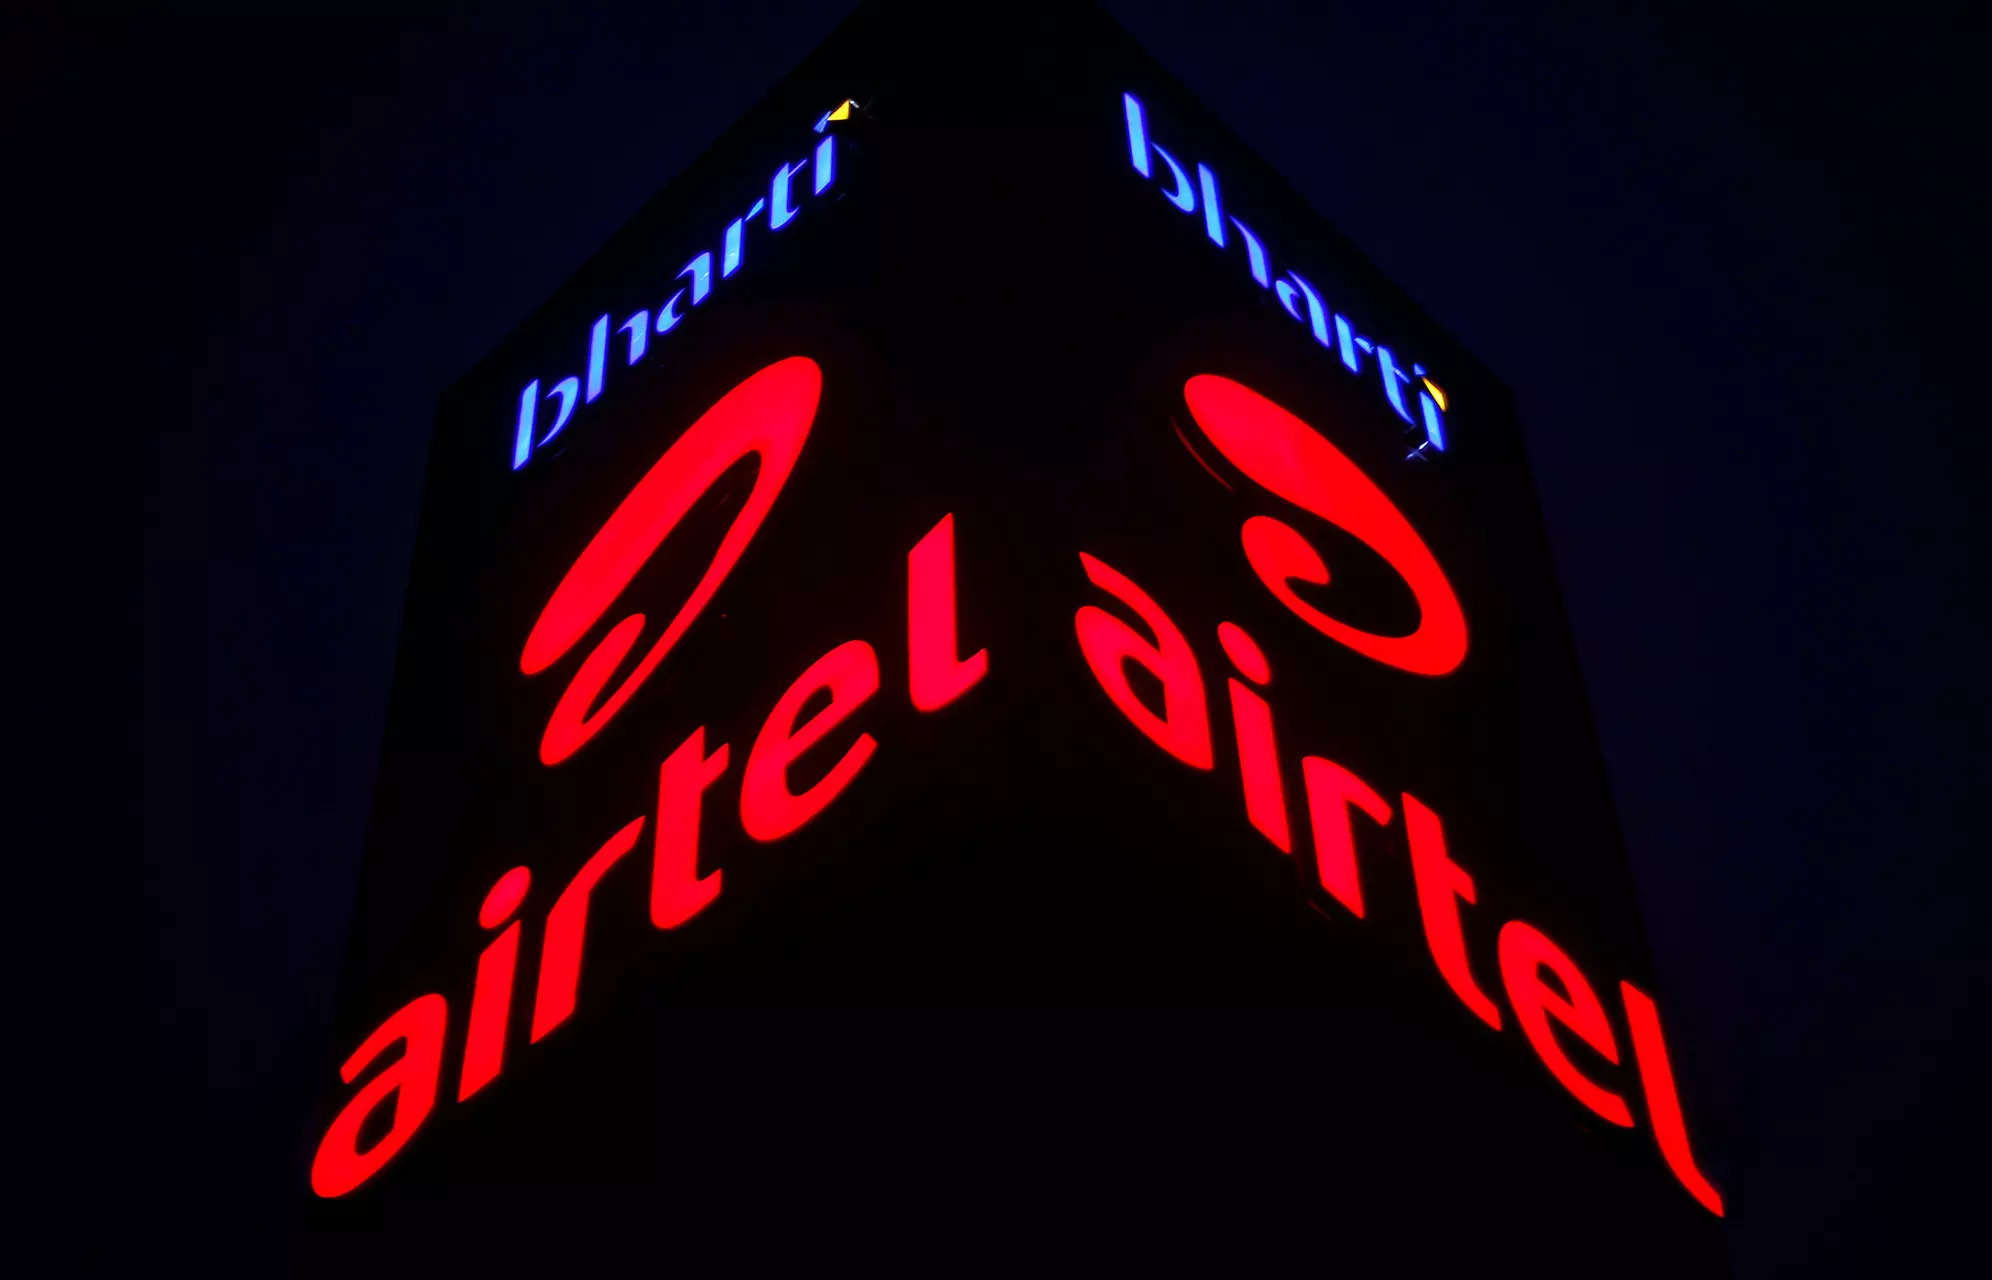 Airtel trades higher amidst high data user addition in Q4 